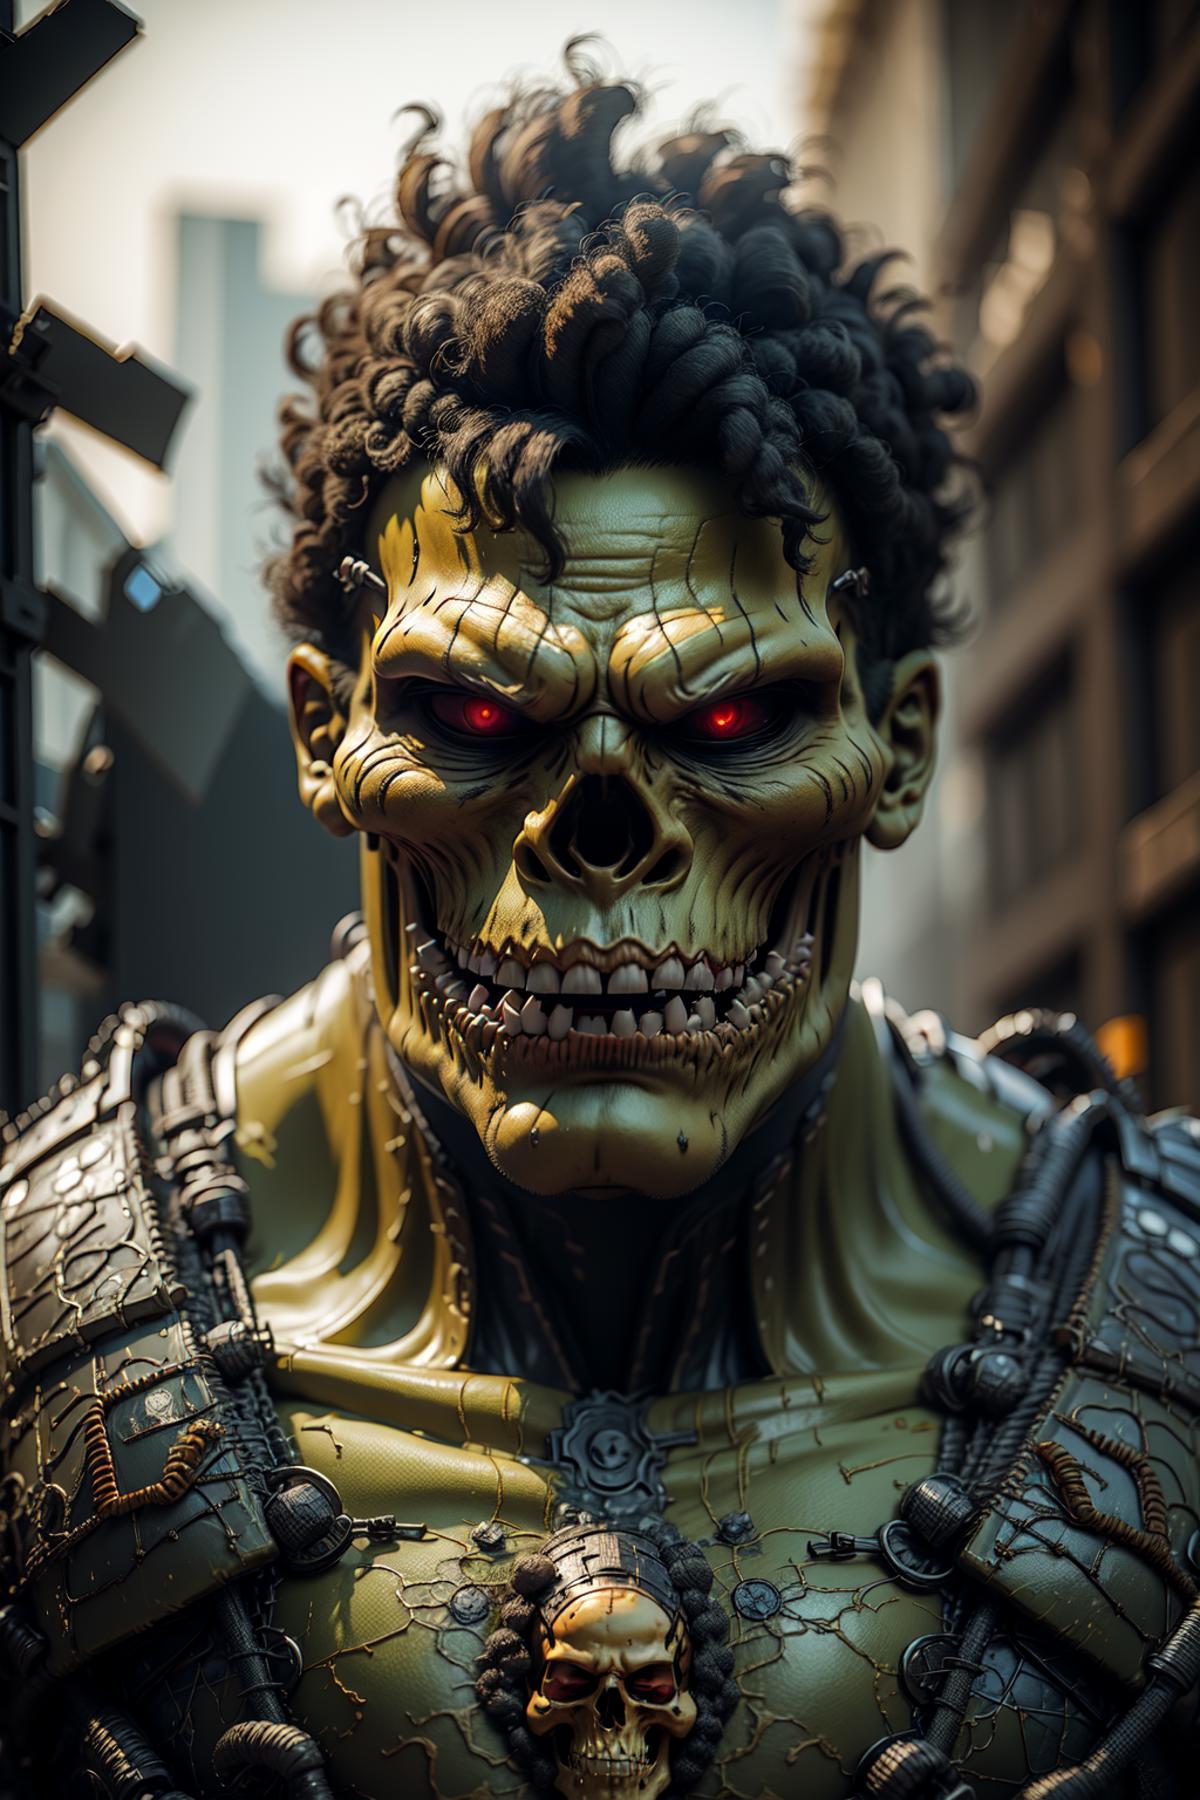 Skull Warrior image by LDWorksDervlex